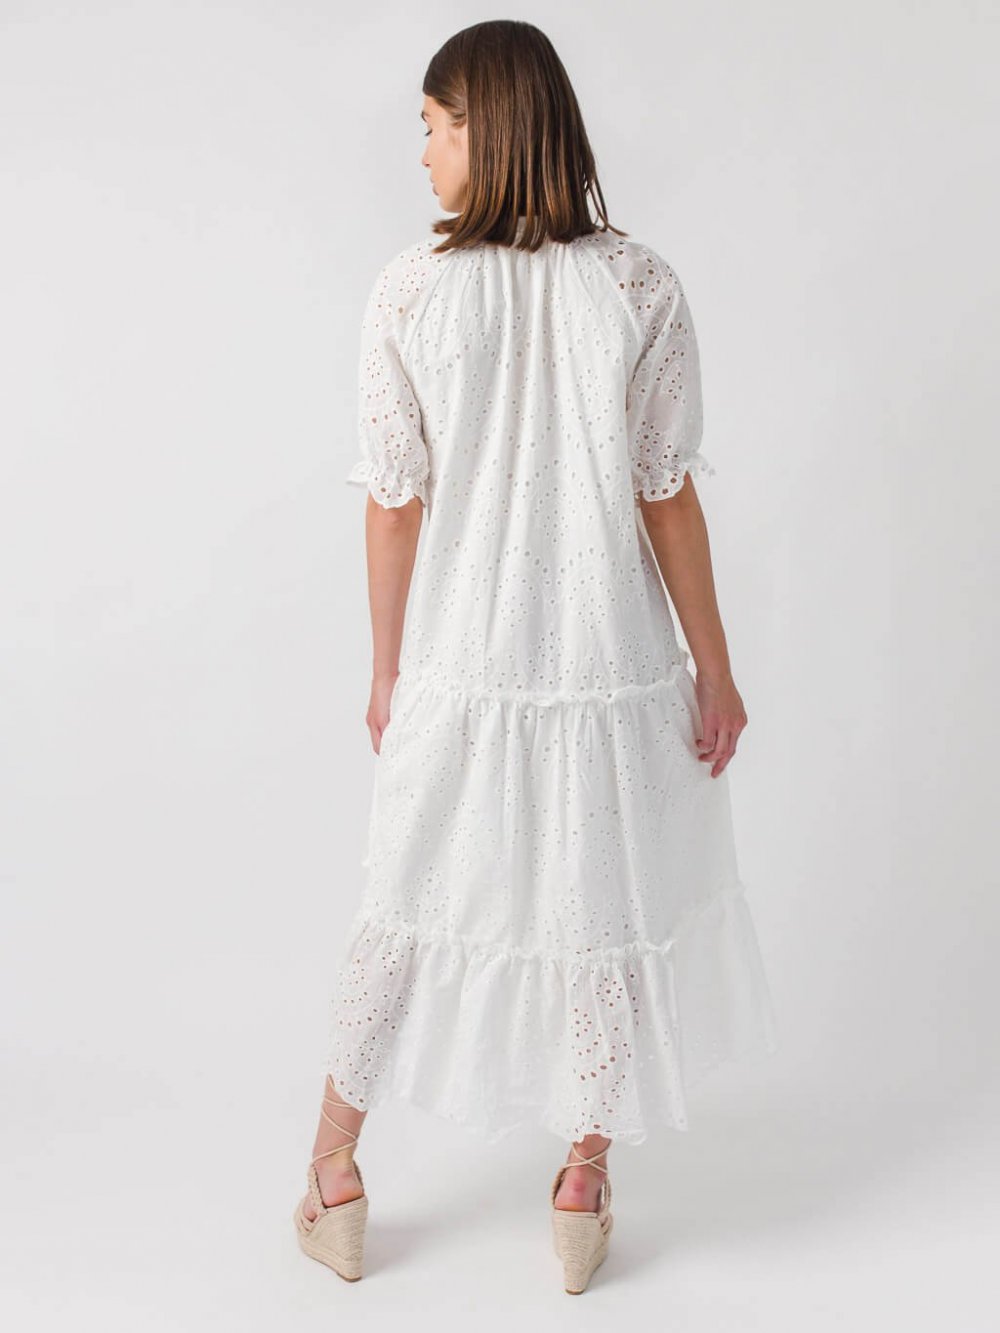 Bílé šaty Madera